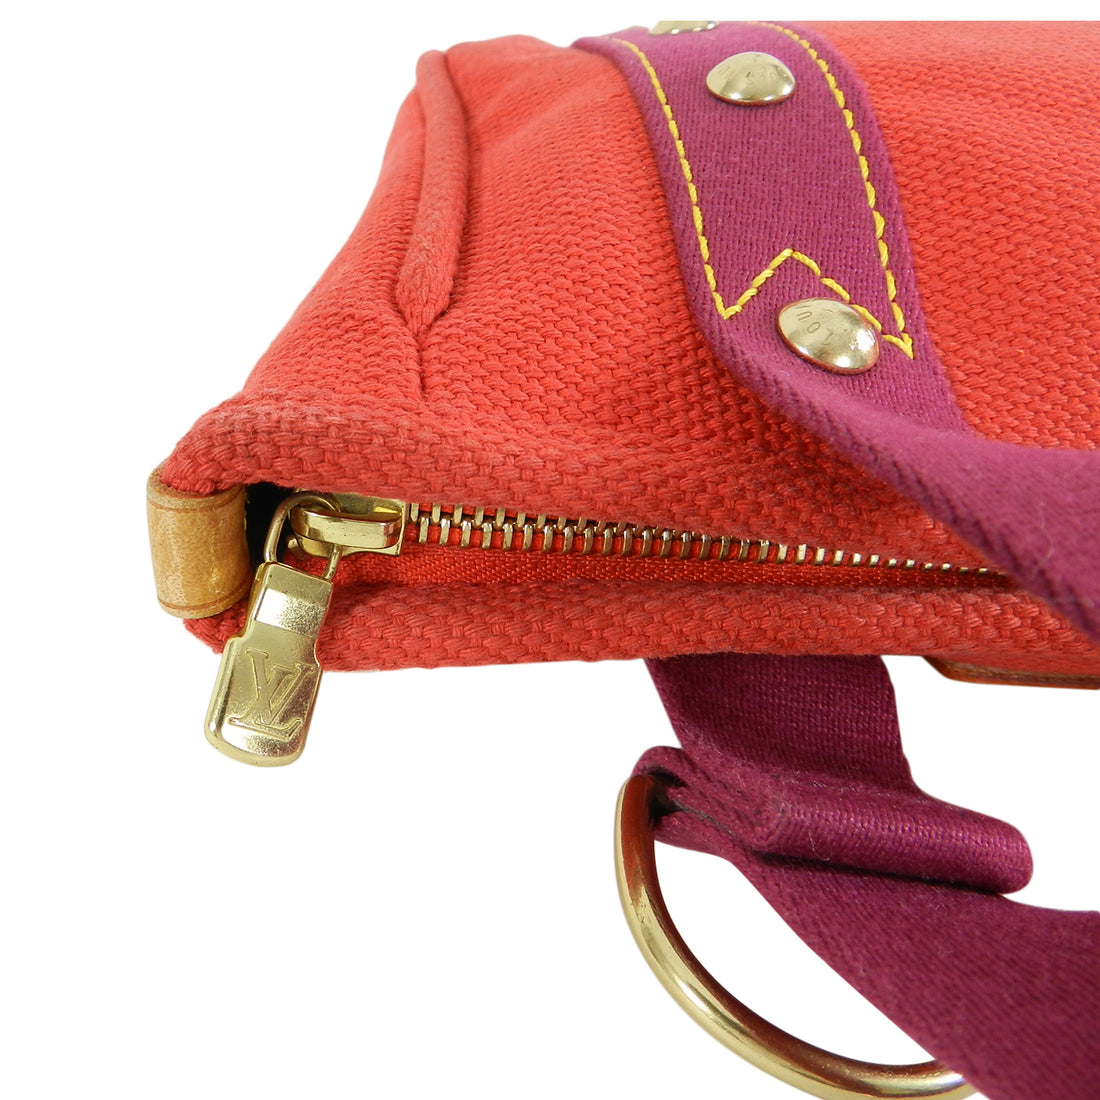 Louis Vuitton Antigua Cabas Red Toile PM Bag